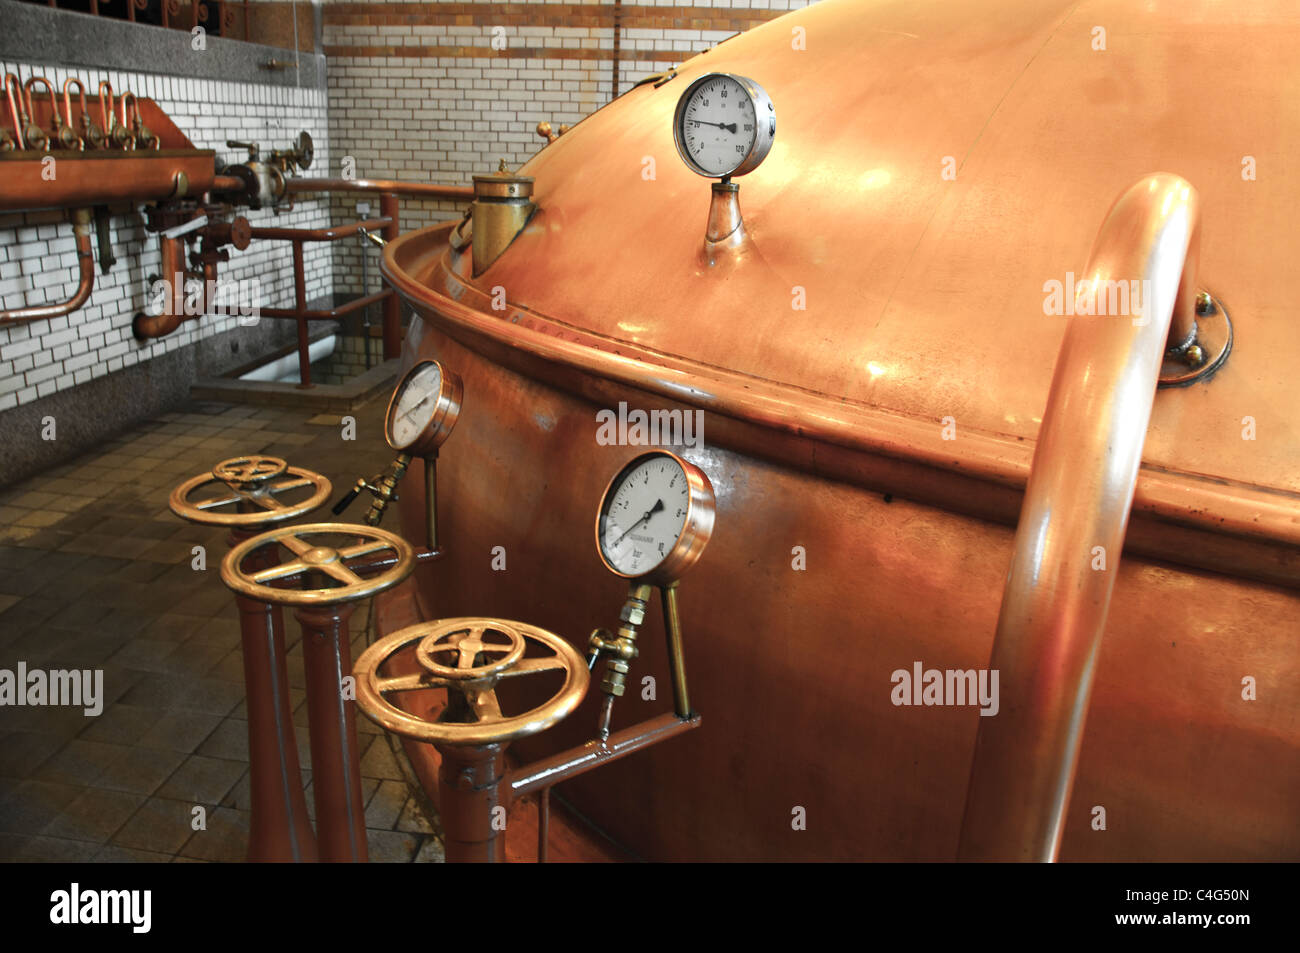 Industrielle Bier Braukessel Stockfotografie - Alamy